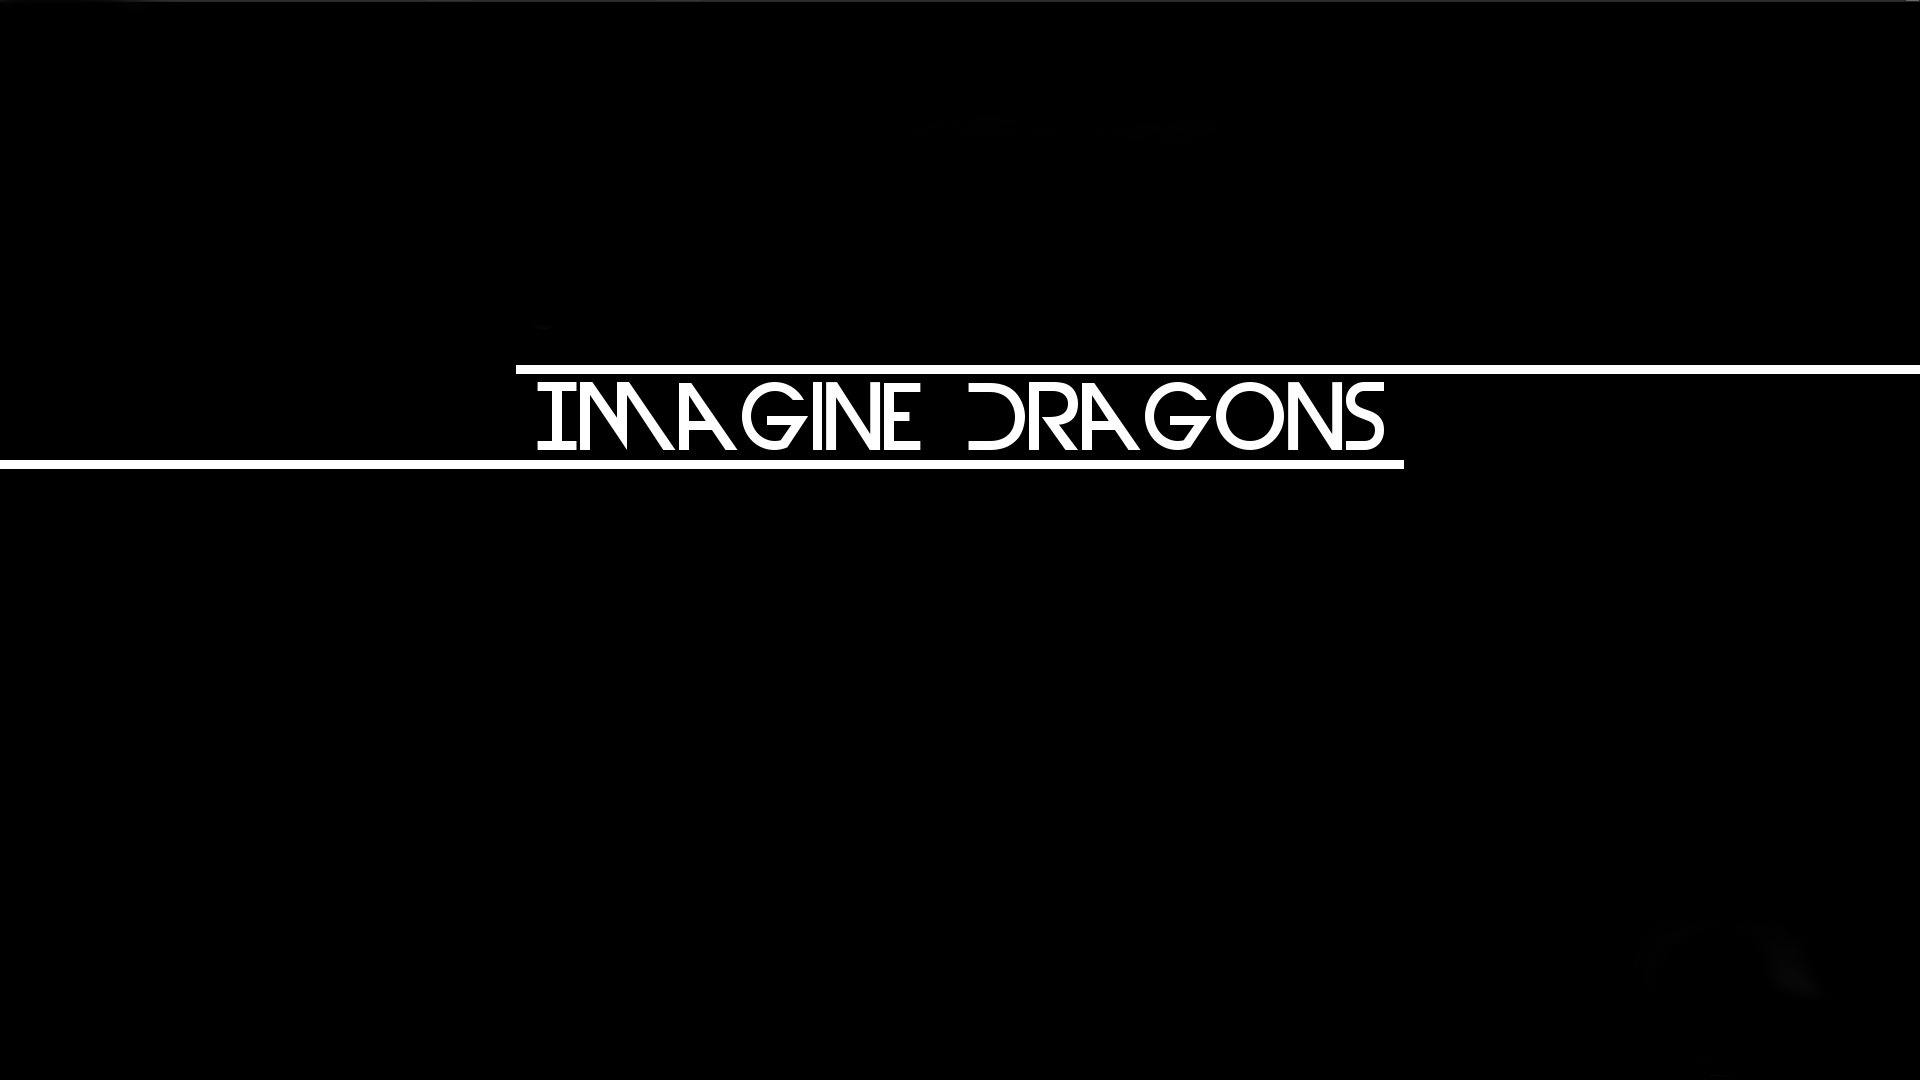 Imagine Dragons A Sub Gallery By Cdd